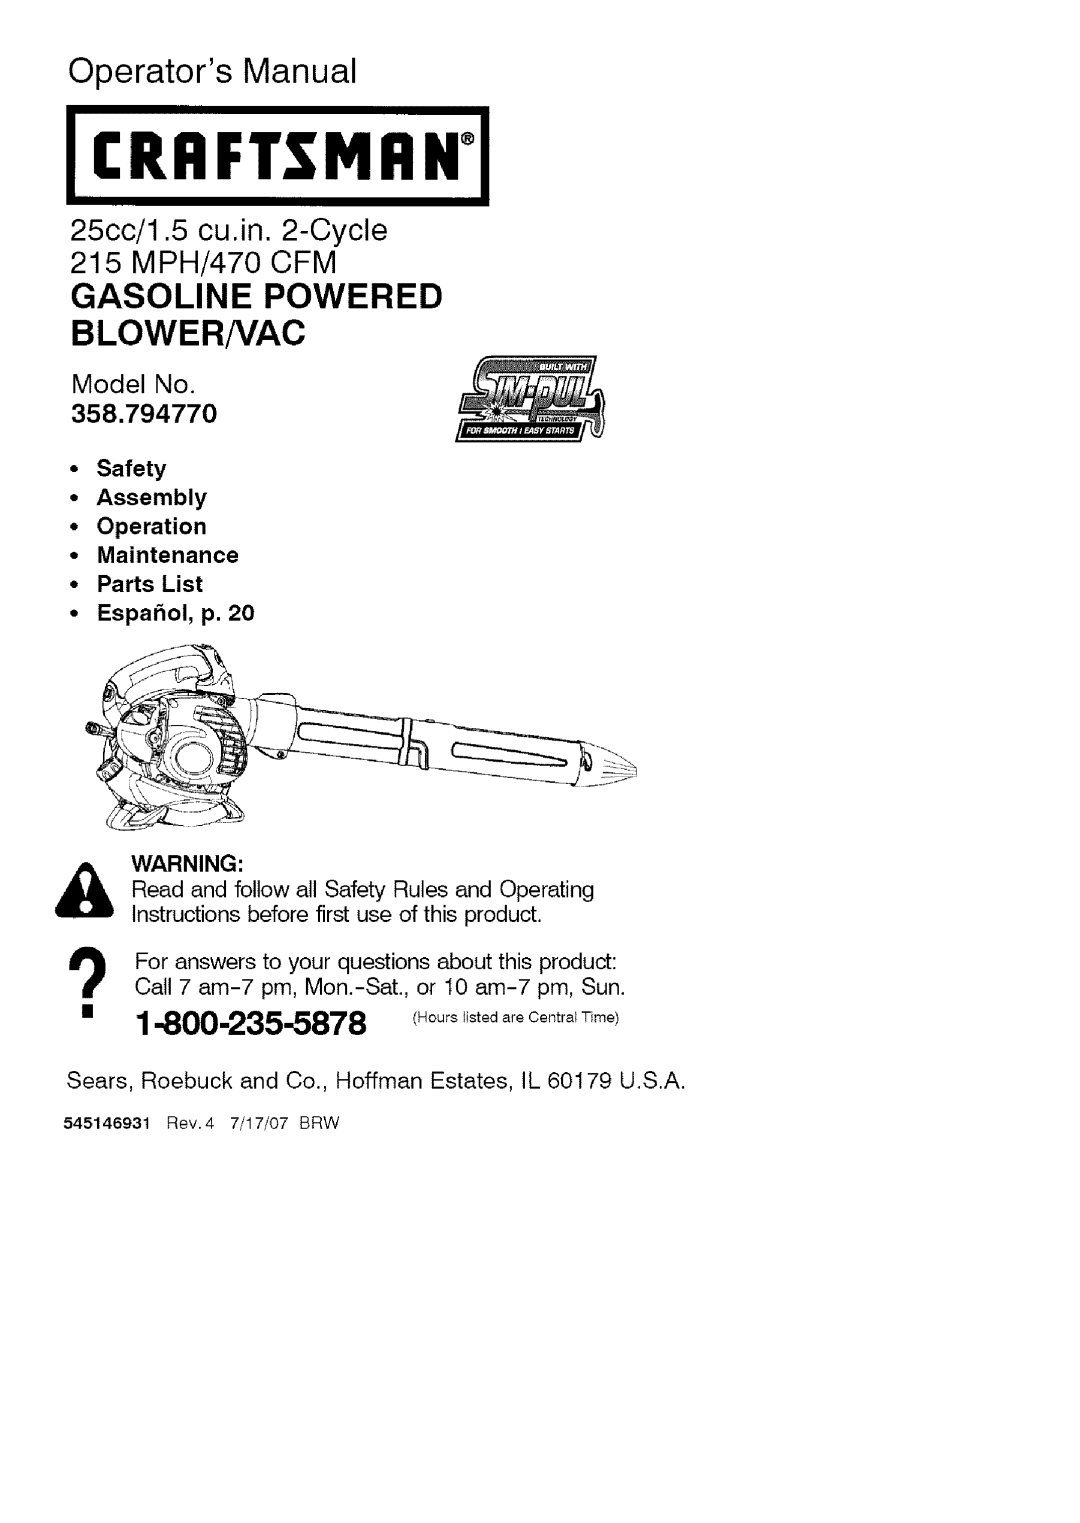 Craftsman 358.79477 manual I Crrftsmrni, Operators Manual, Gasoline Powered Blowernac, Model No, Parts List Espar ol, p 